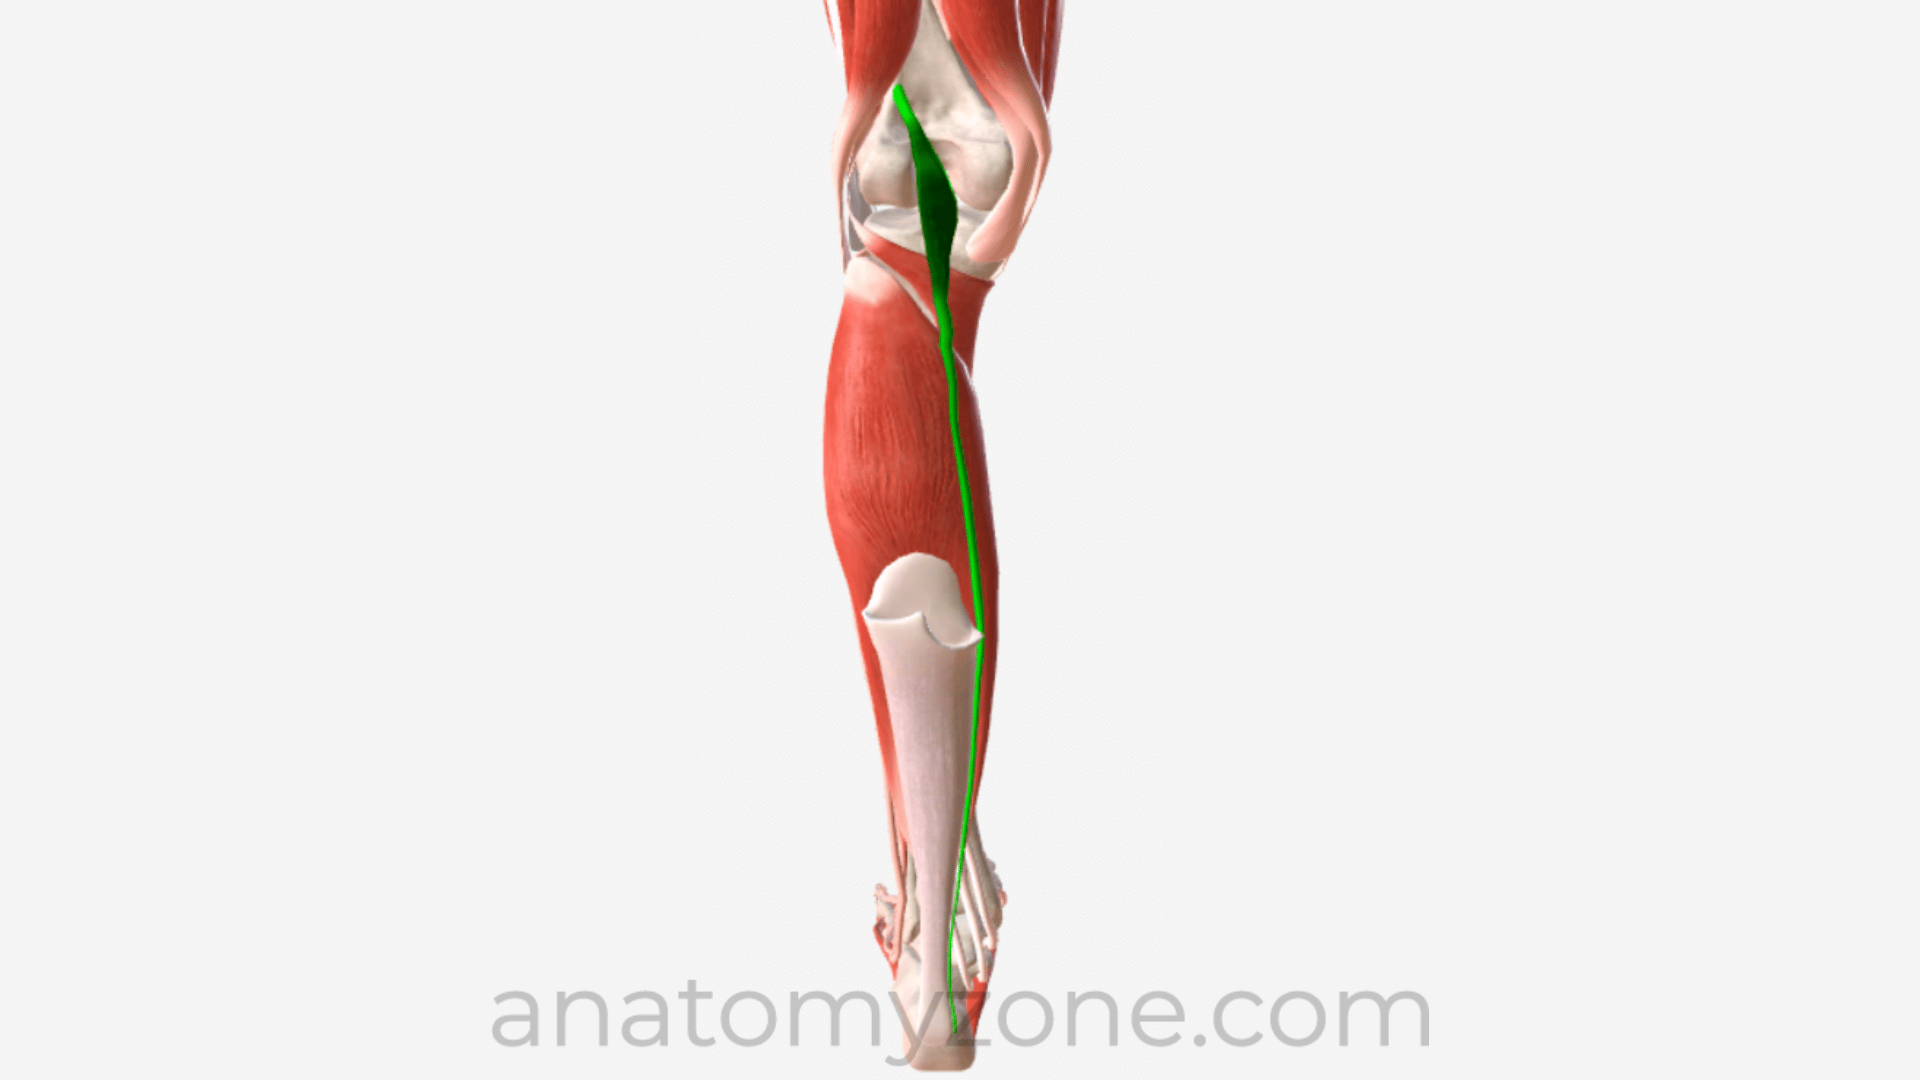 plantaris 3D muscle anatomy